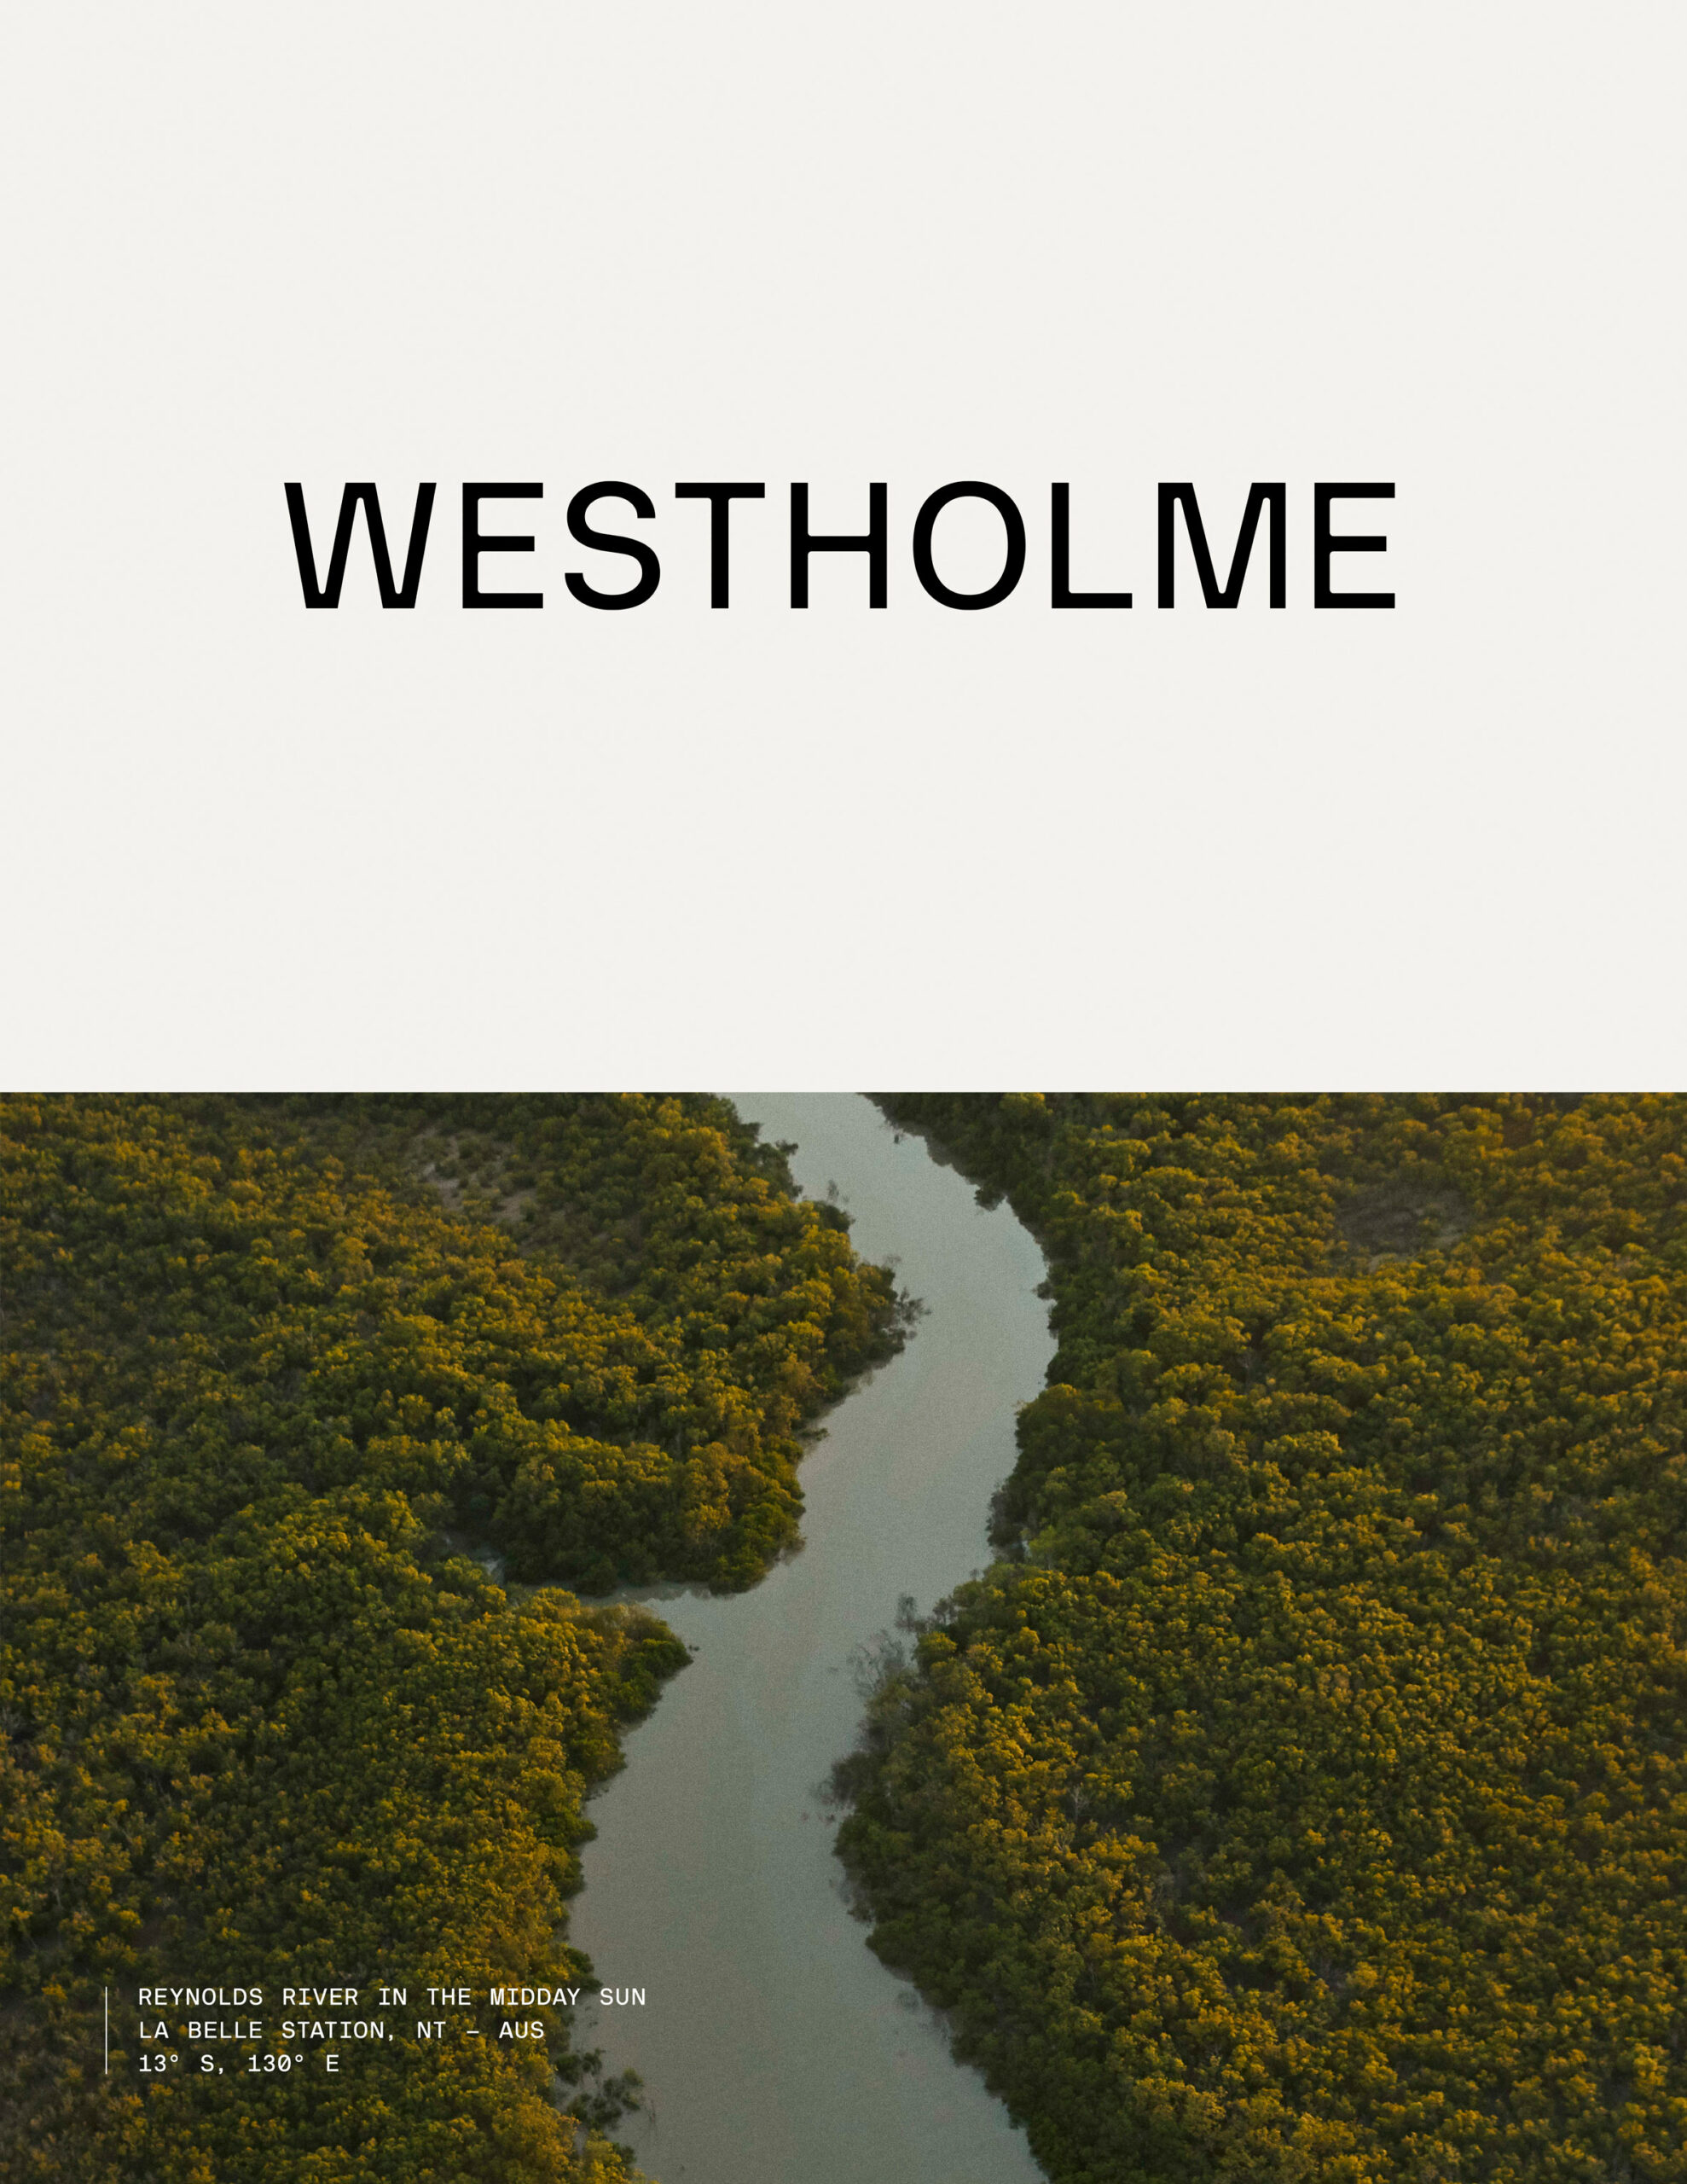 WestholmeBrandingDesign_HalfWidth_CoriCorinne15